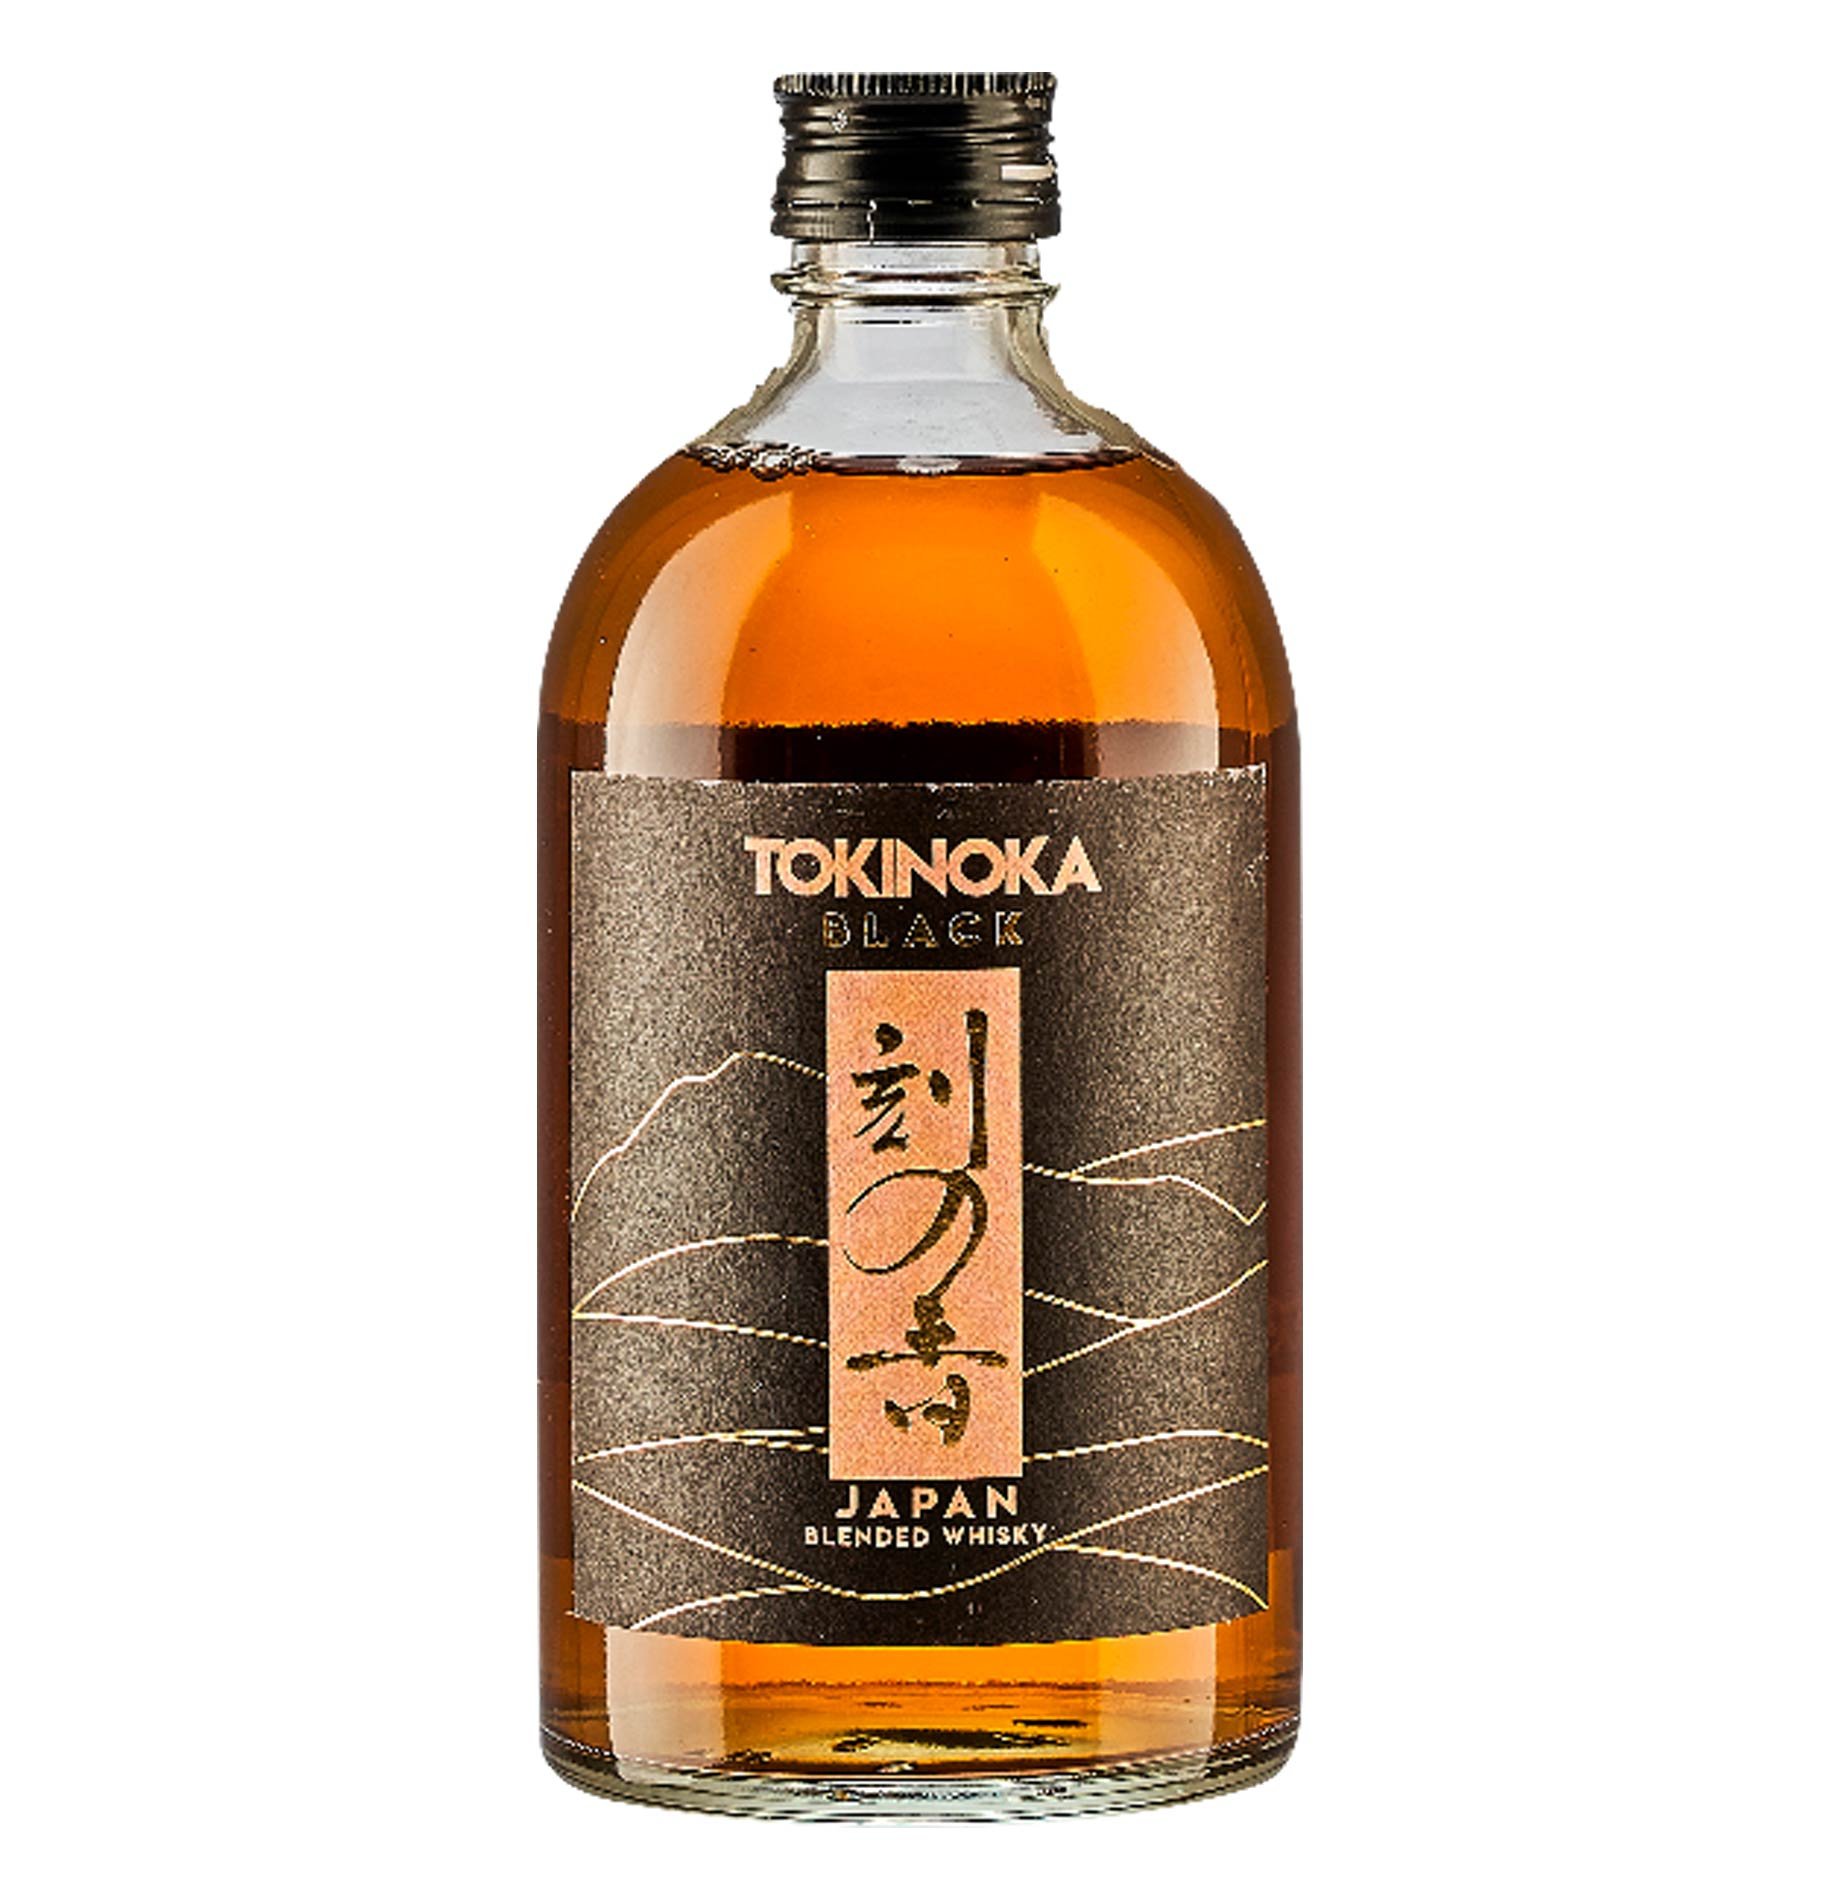 Japan Blended Whisky Tokinoka Black Tc